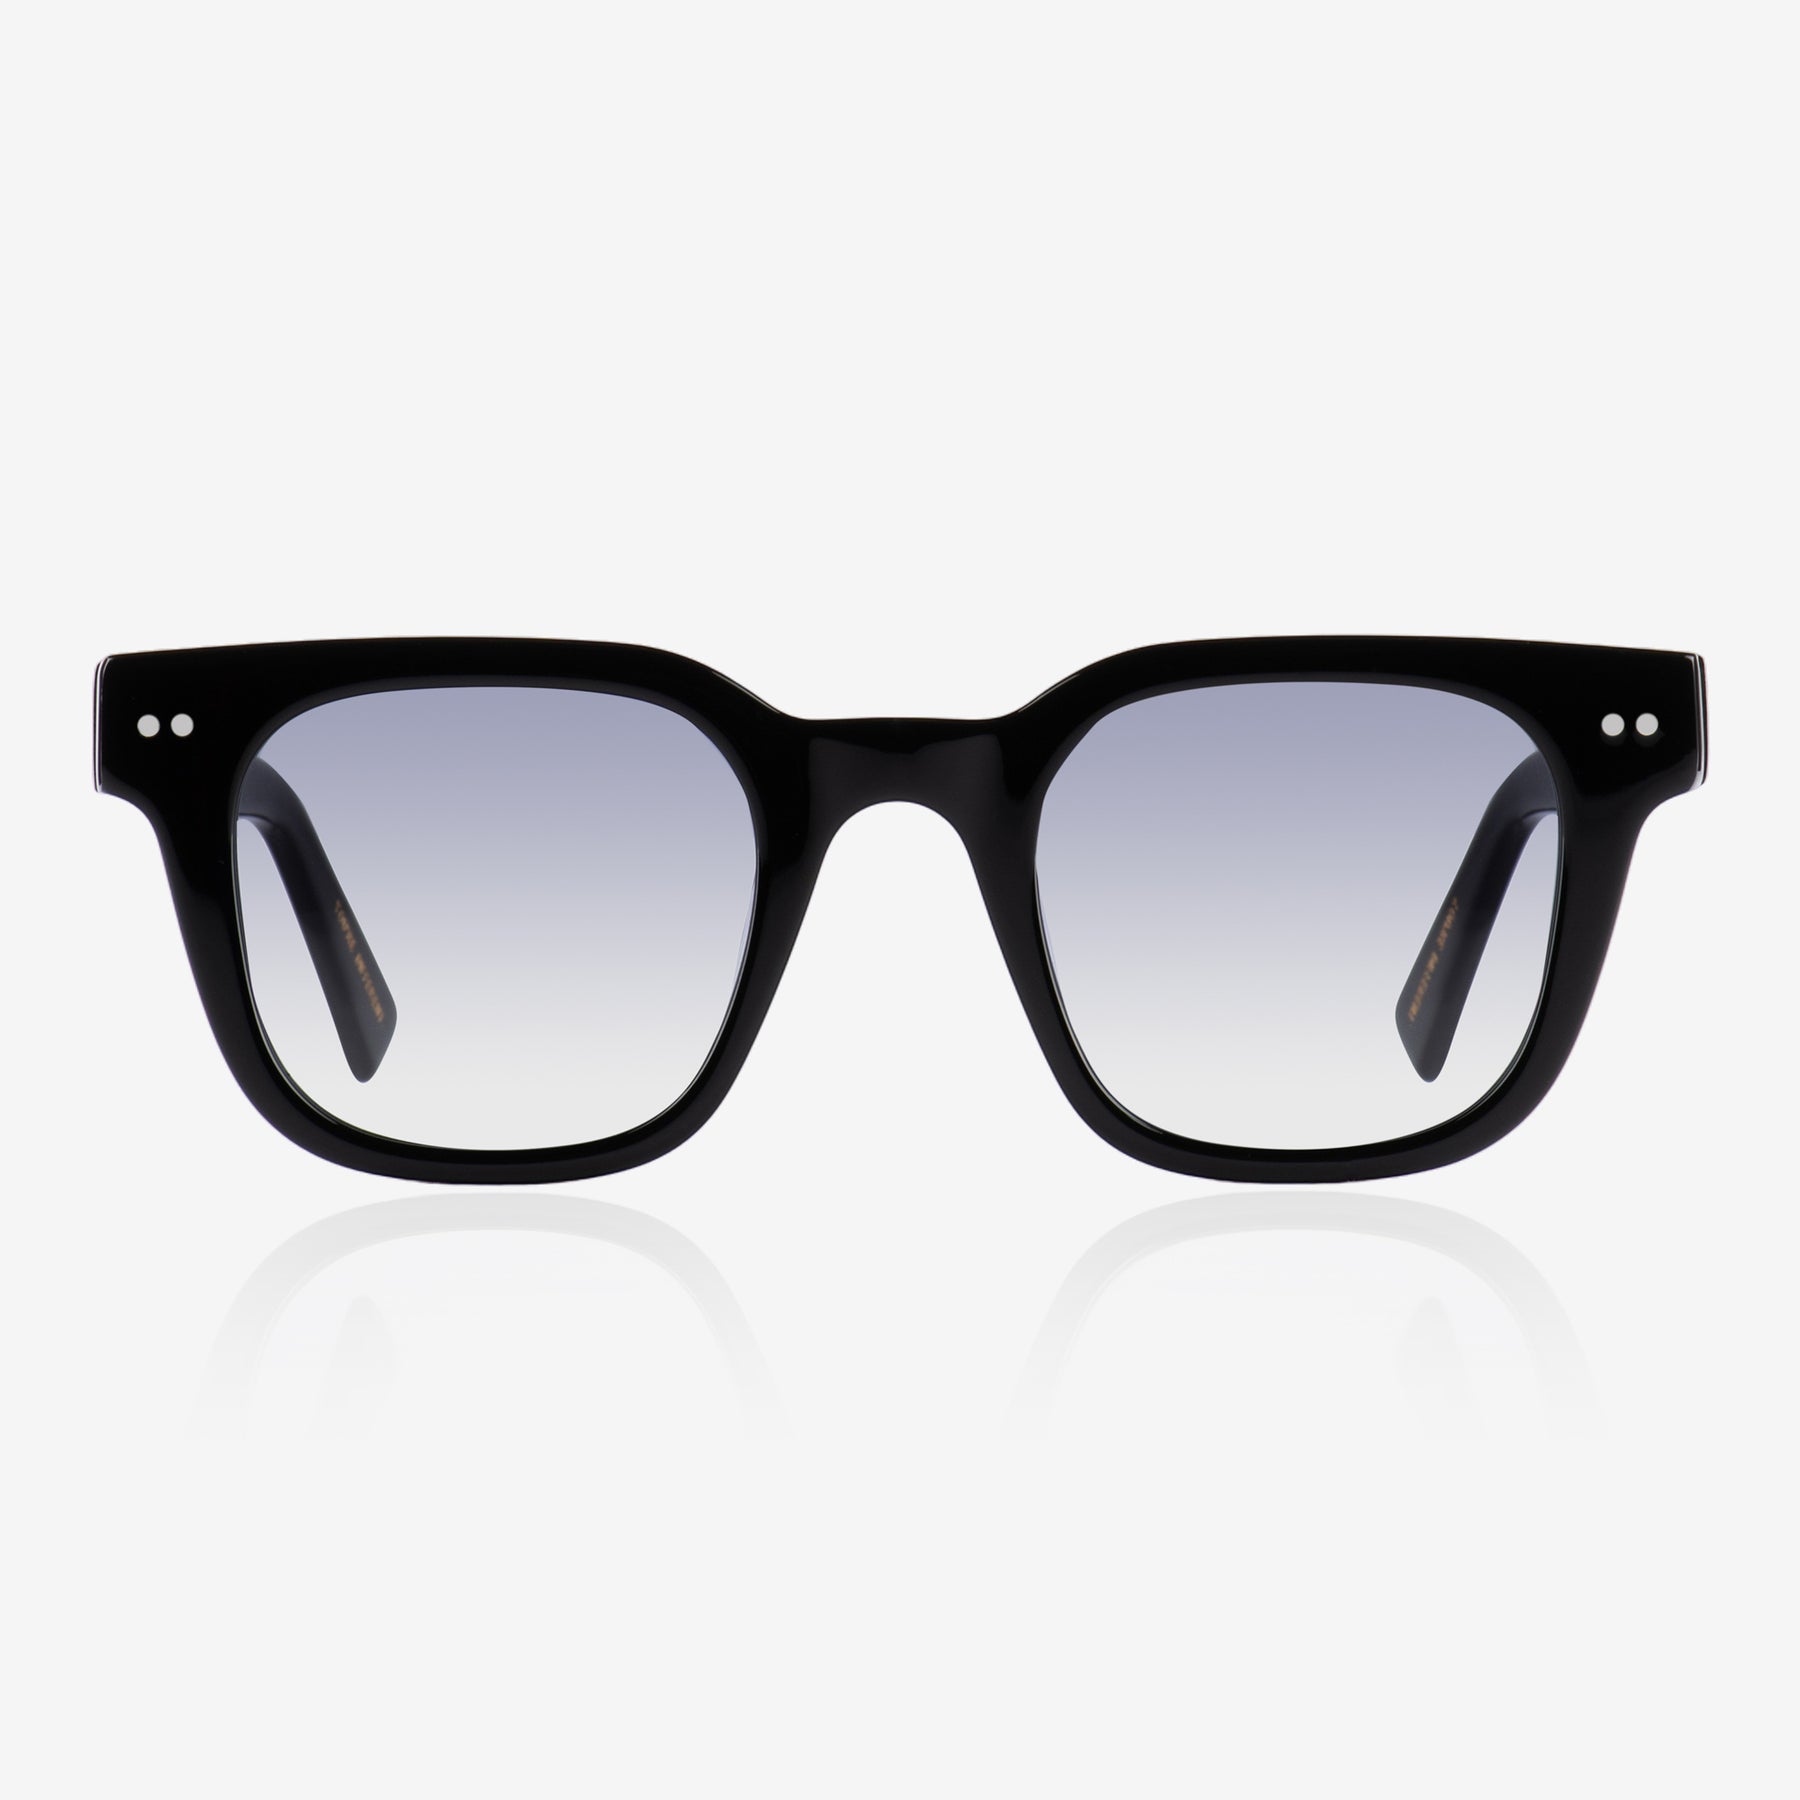 De-sunglasses| Dash blue | Sunglasses for men and women